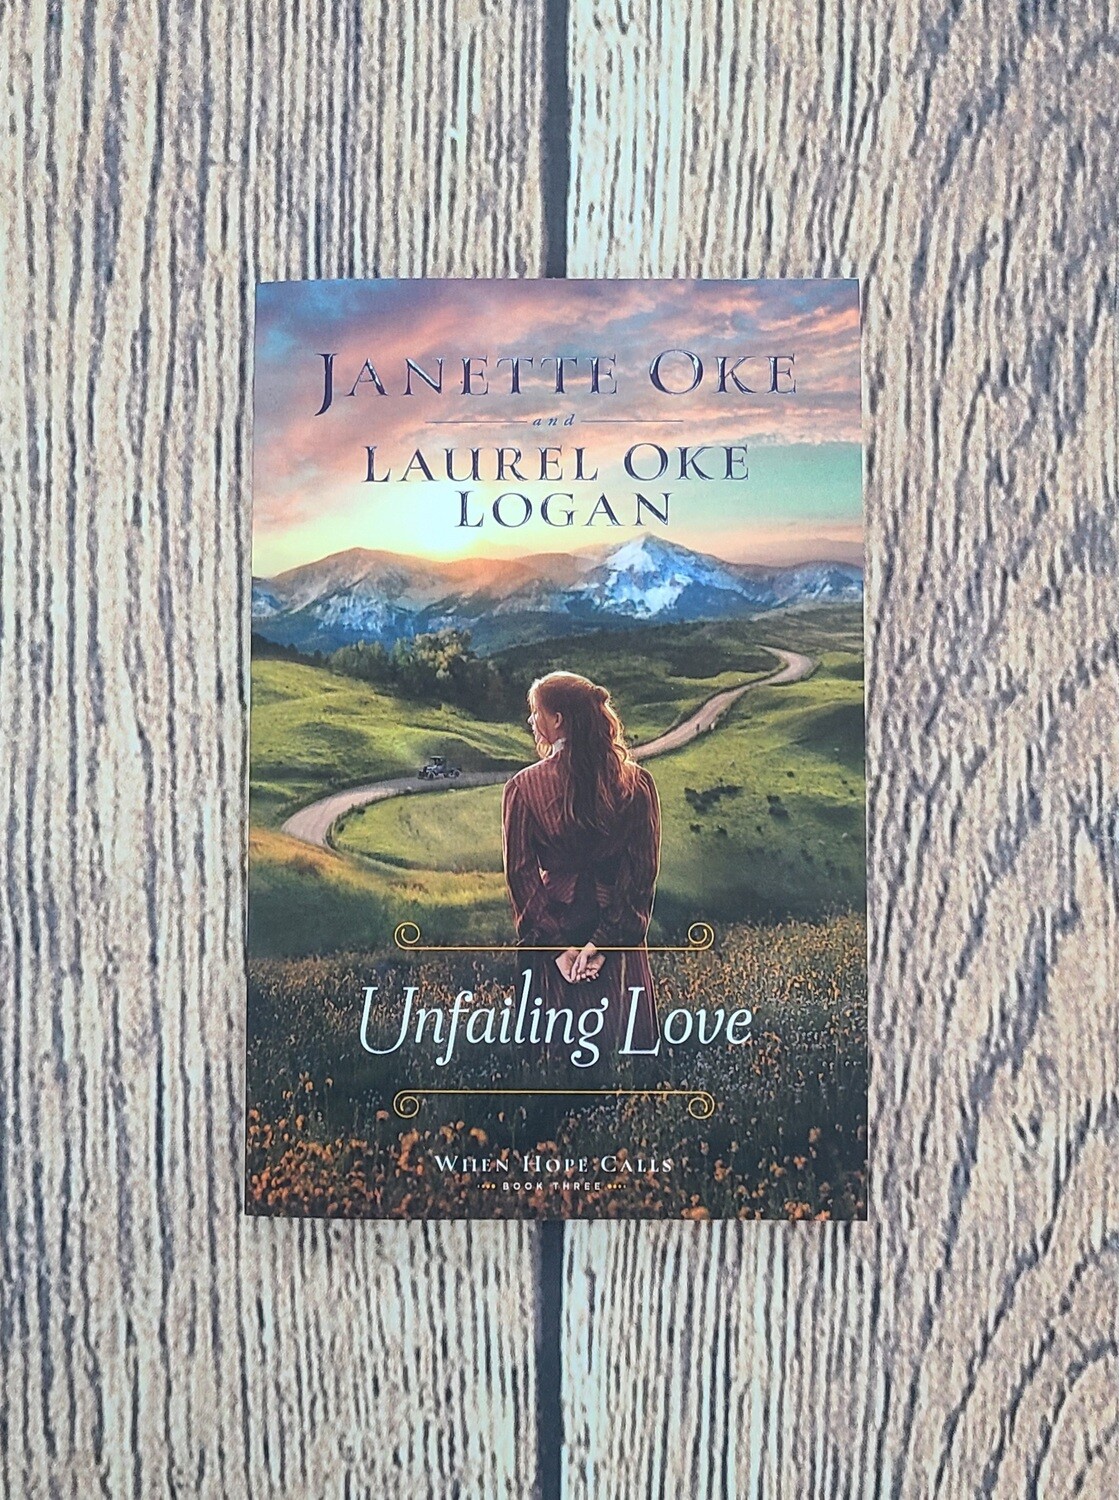 When Hope Calls: Unfailing Love by Janette Oke and Laurel Oke Logan - New